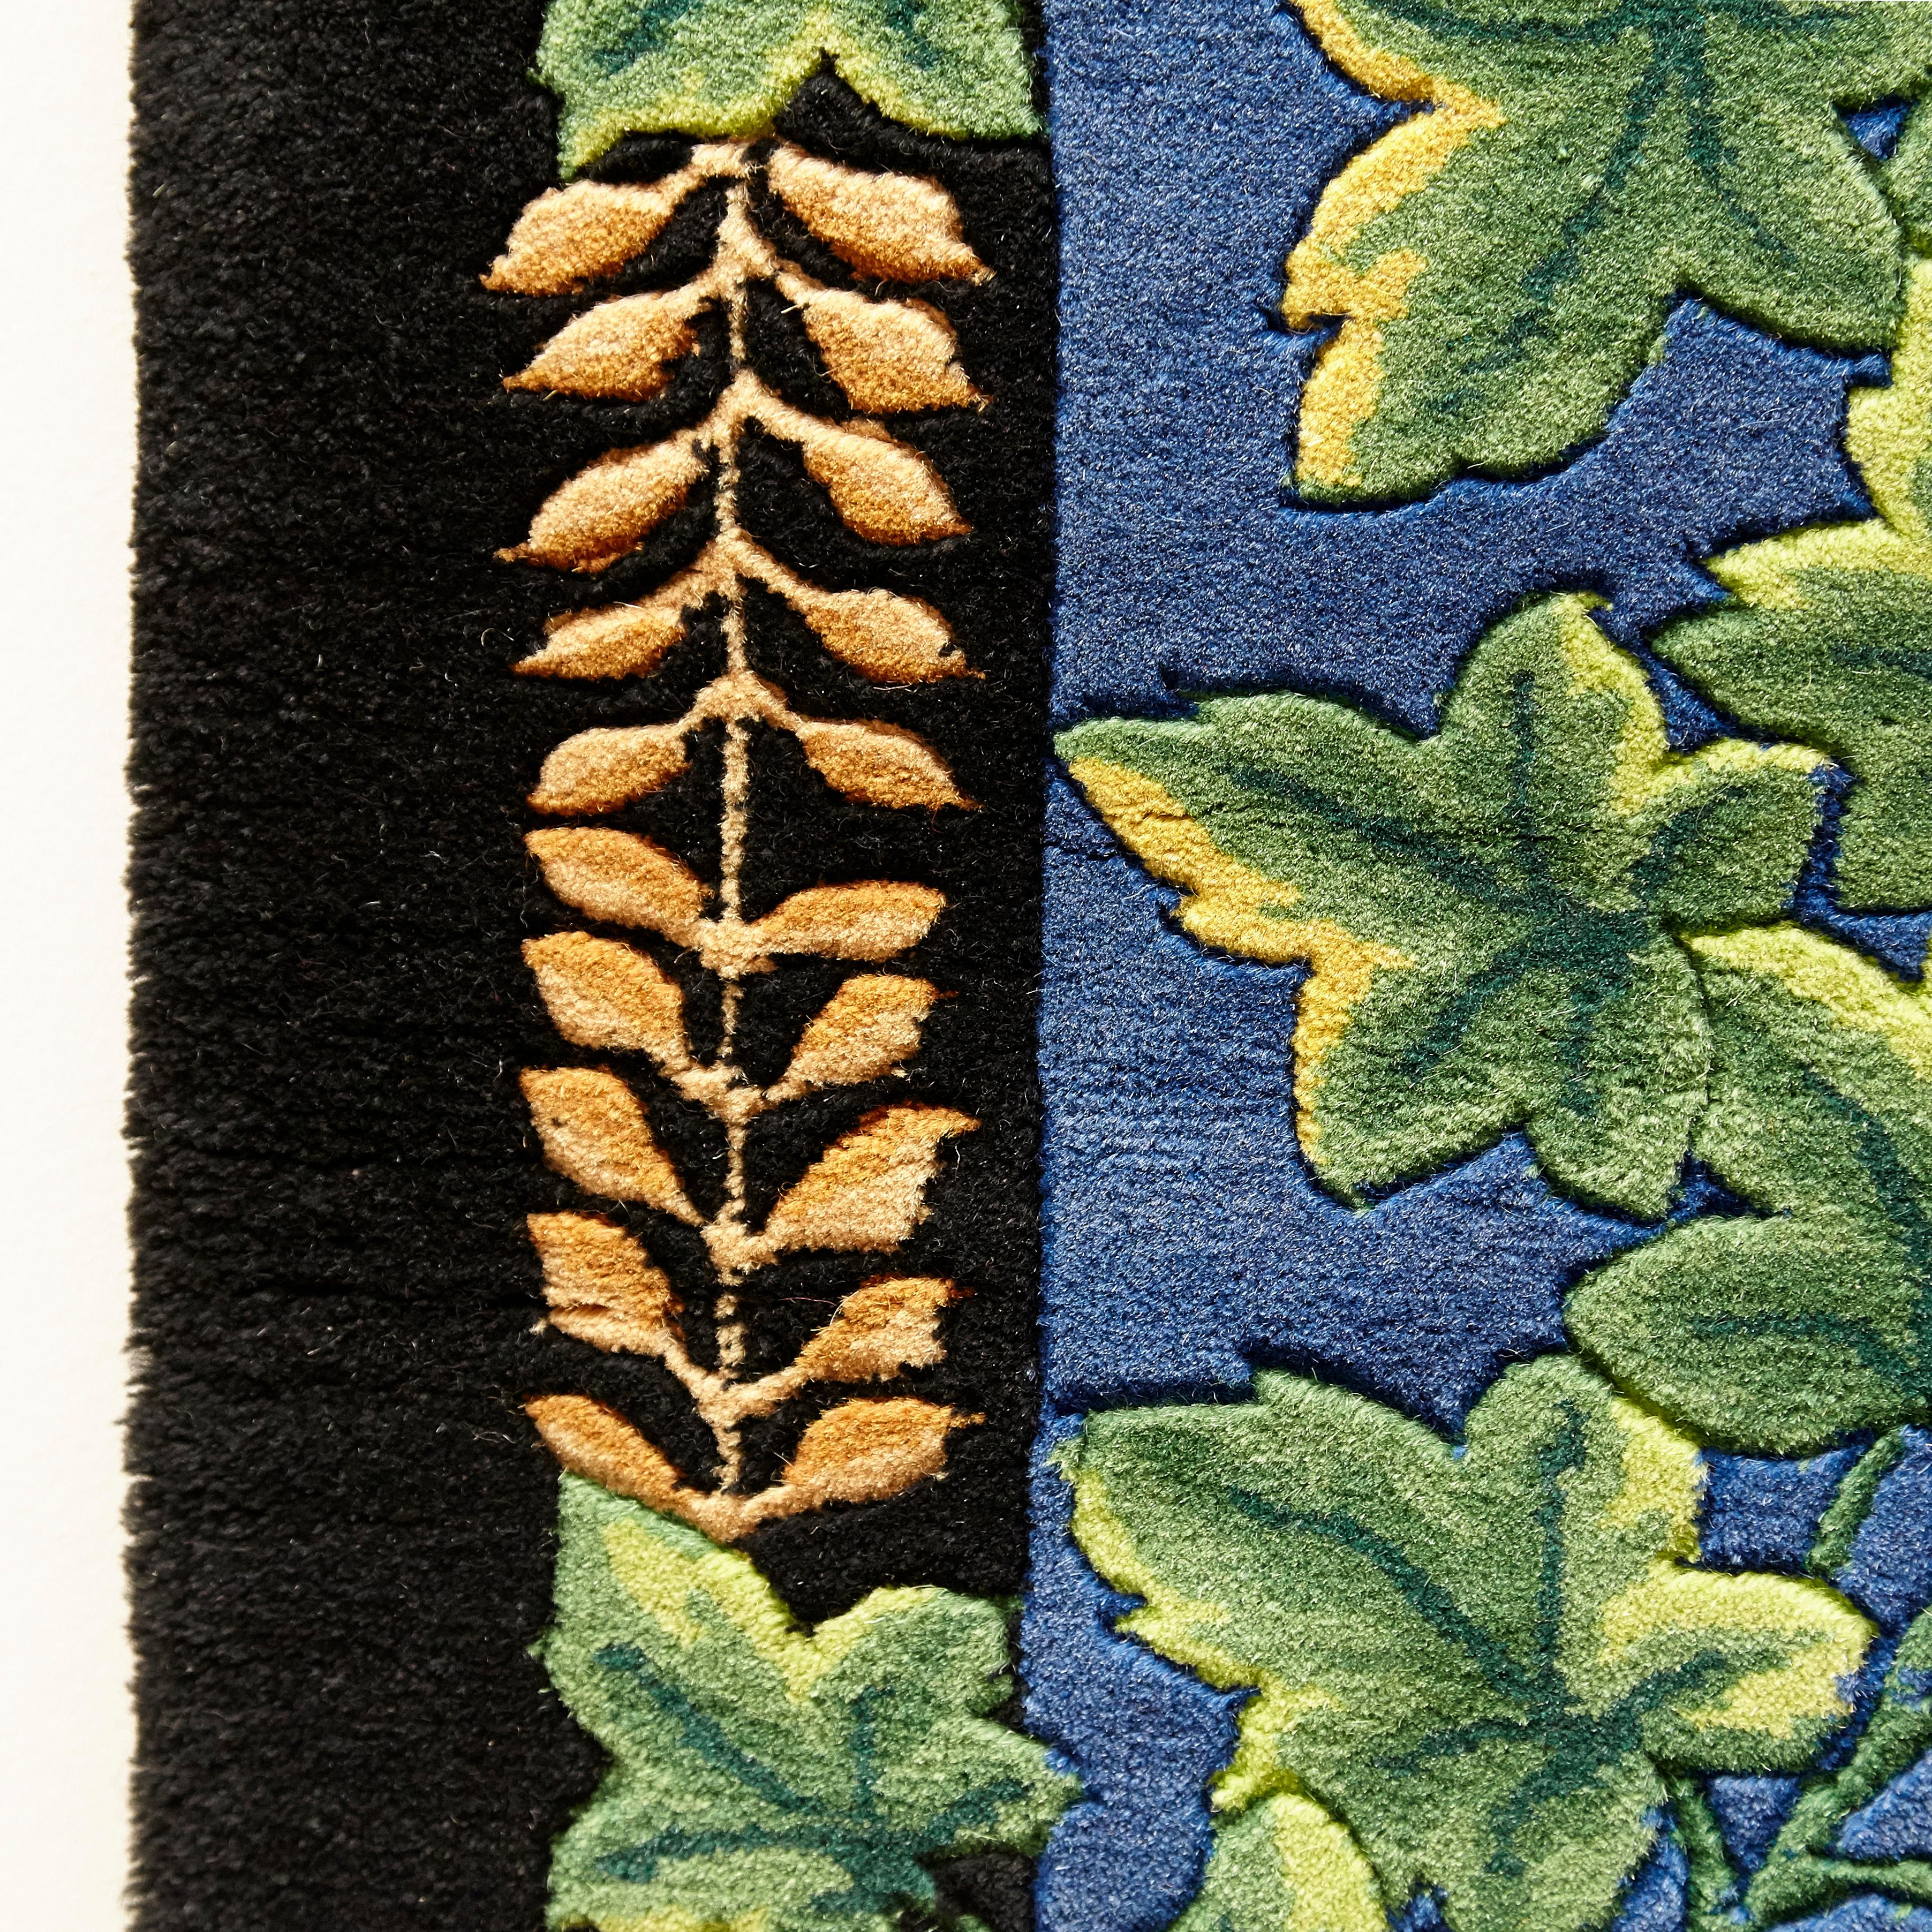 Wool Gianni Versace Collection Rug Wild Ivy, Gold Zebra Animal Print, 1980